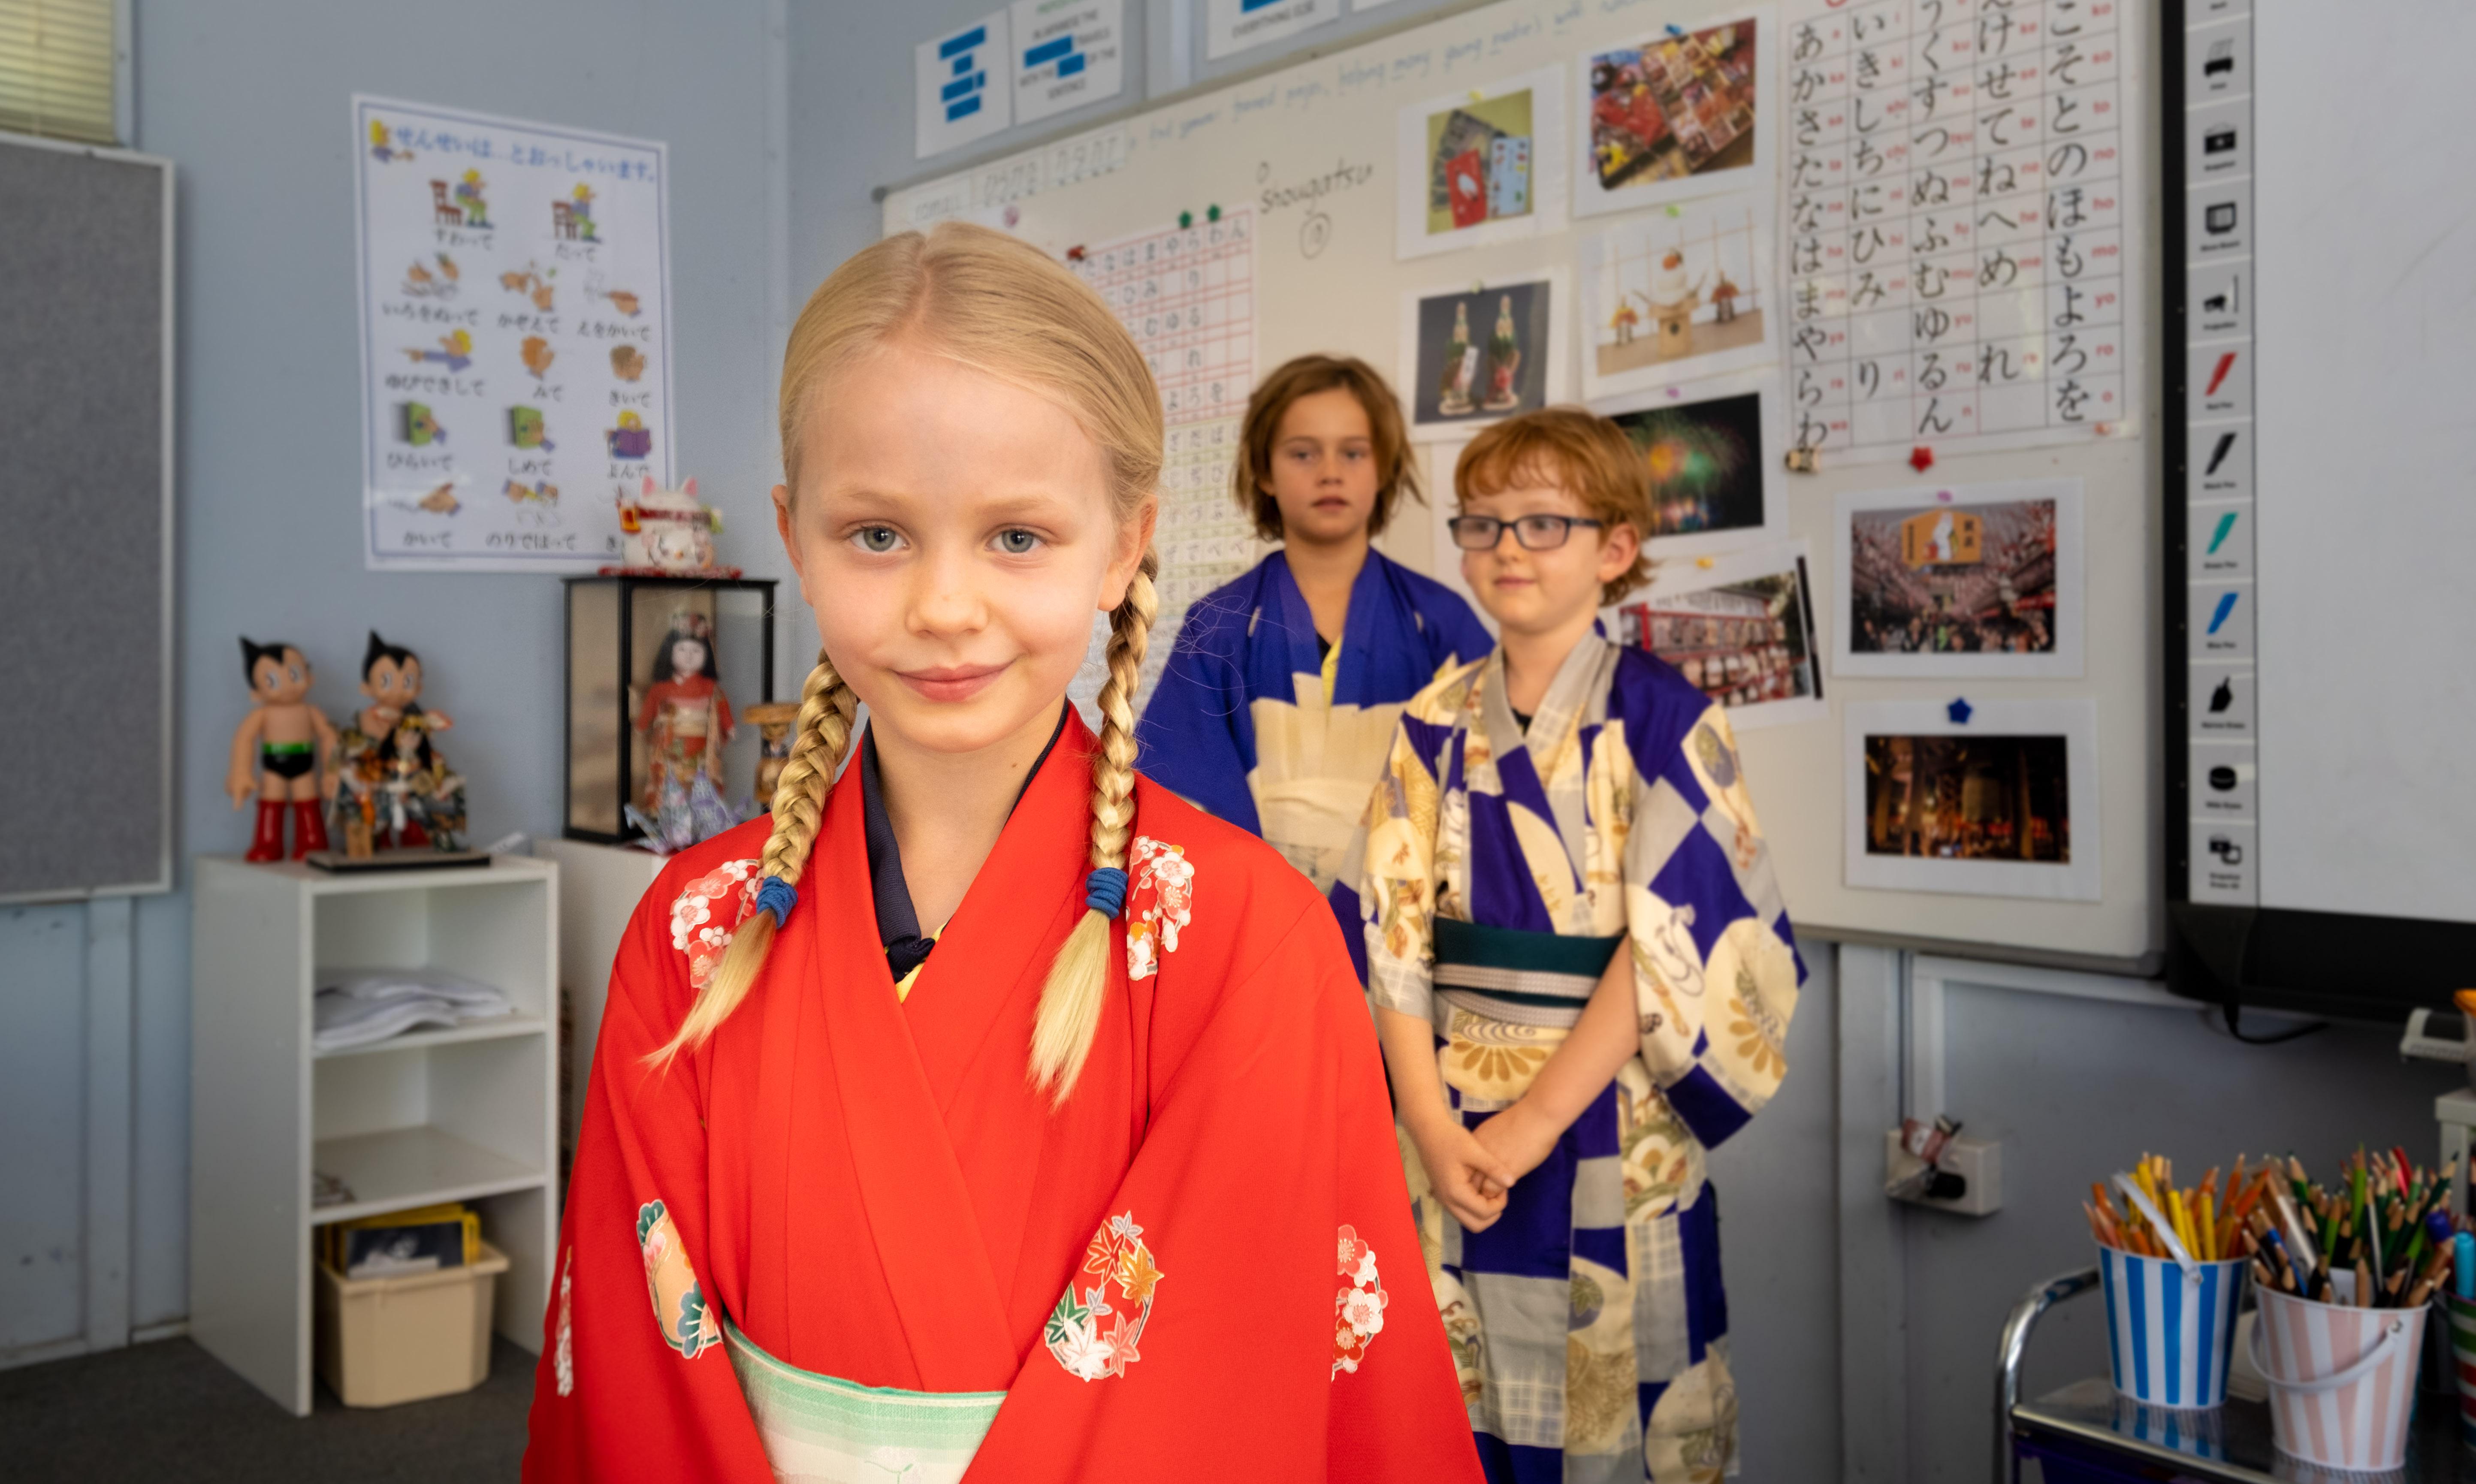 Students dressed in Japanese kimonos